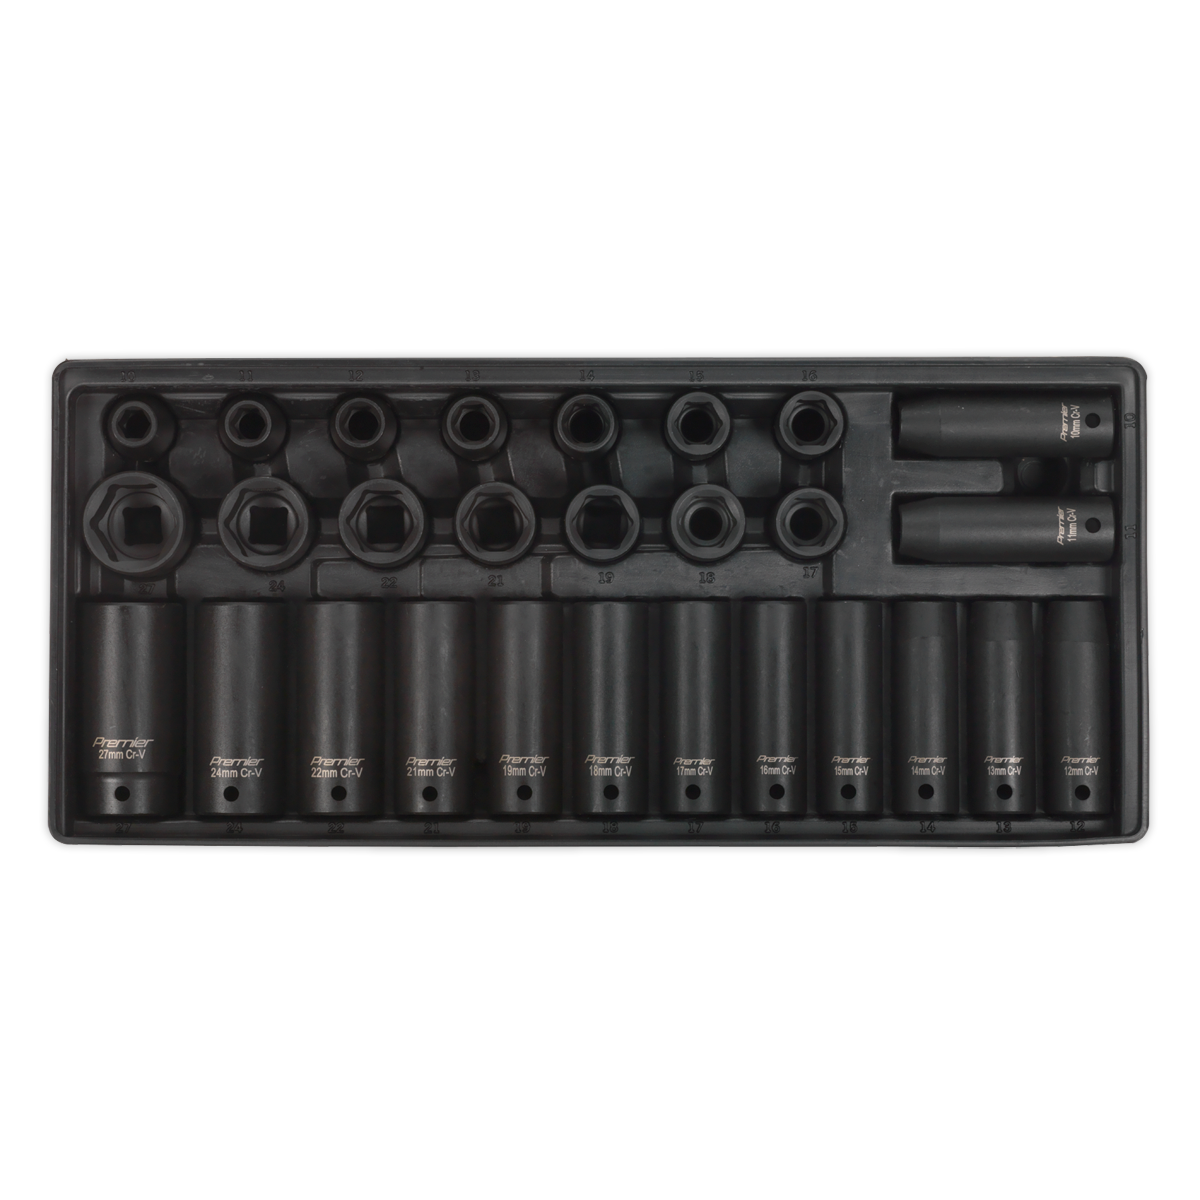 Sealey Tool Tray with Impact Socket Set 28pc 1/2"Sq Drive - Metric